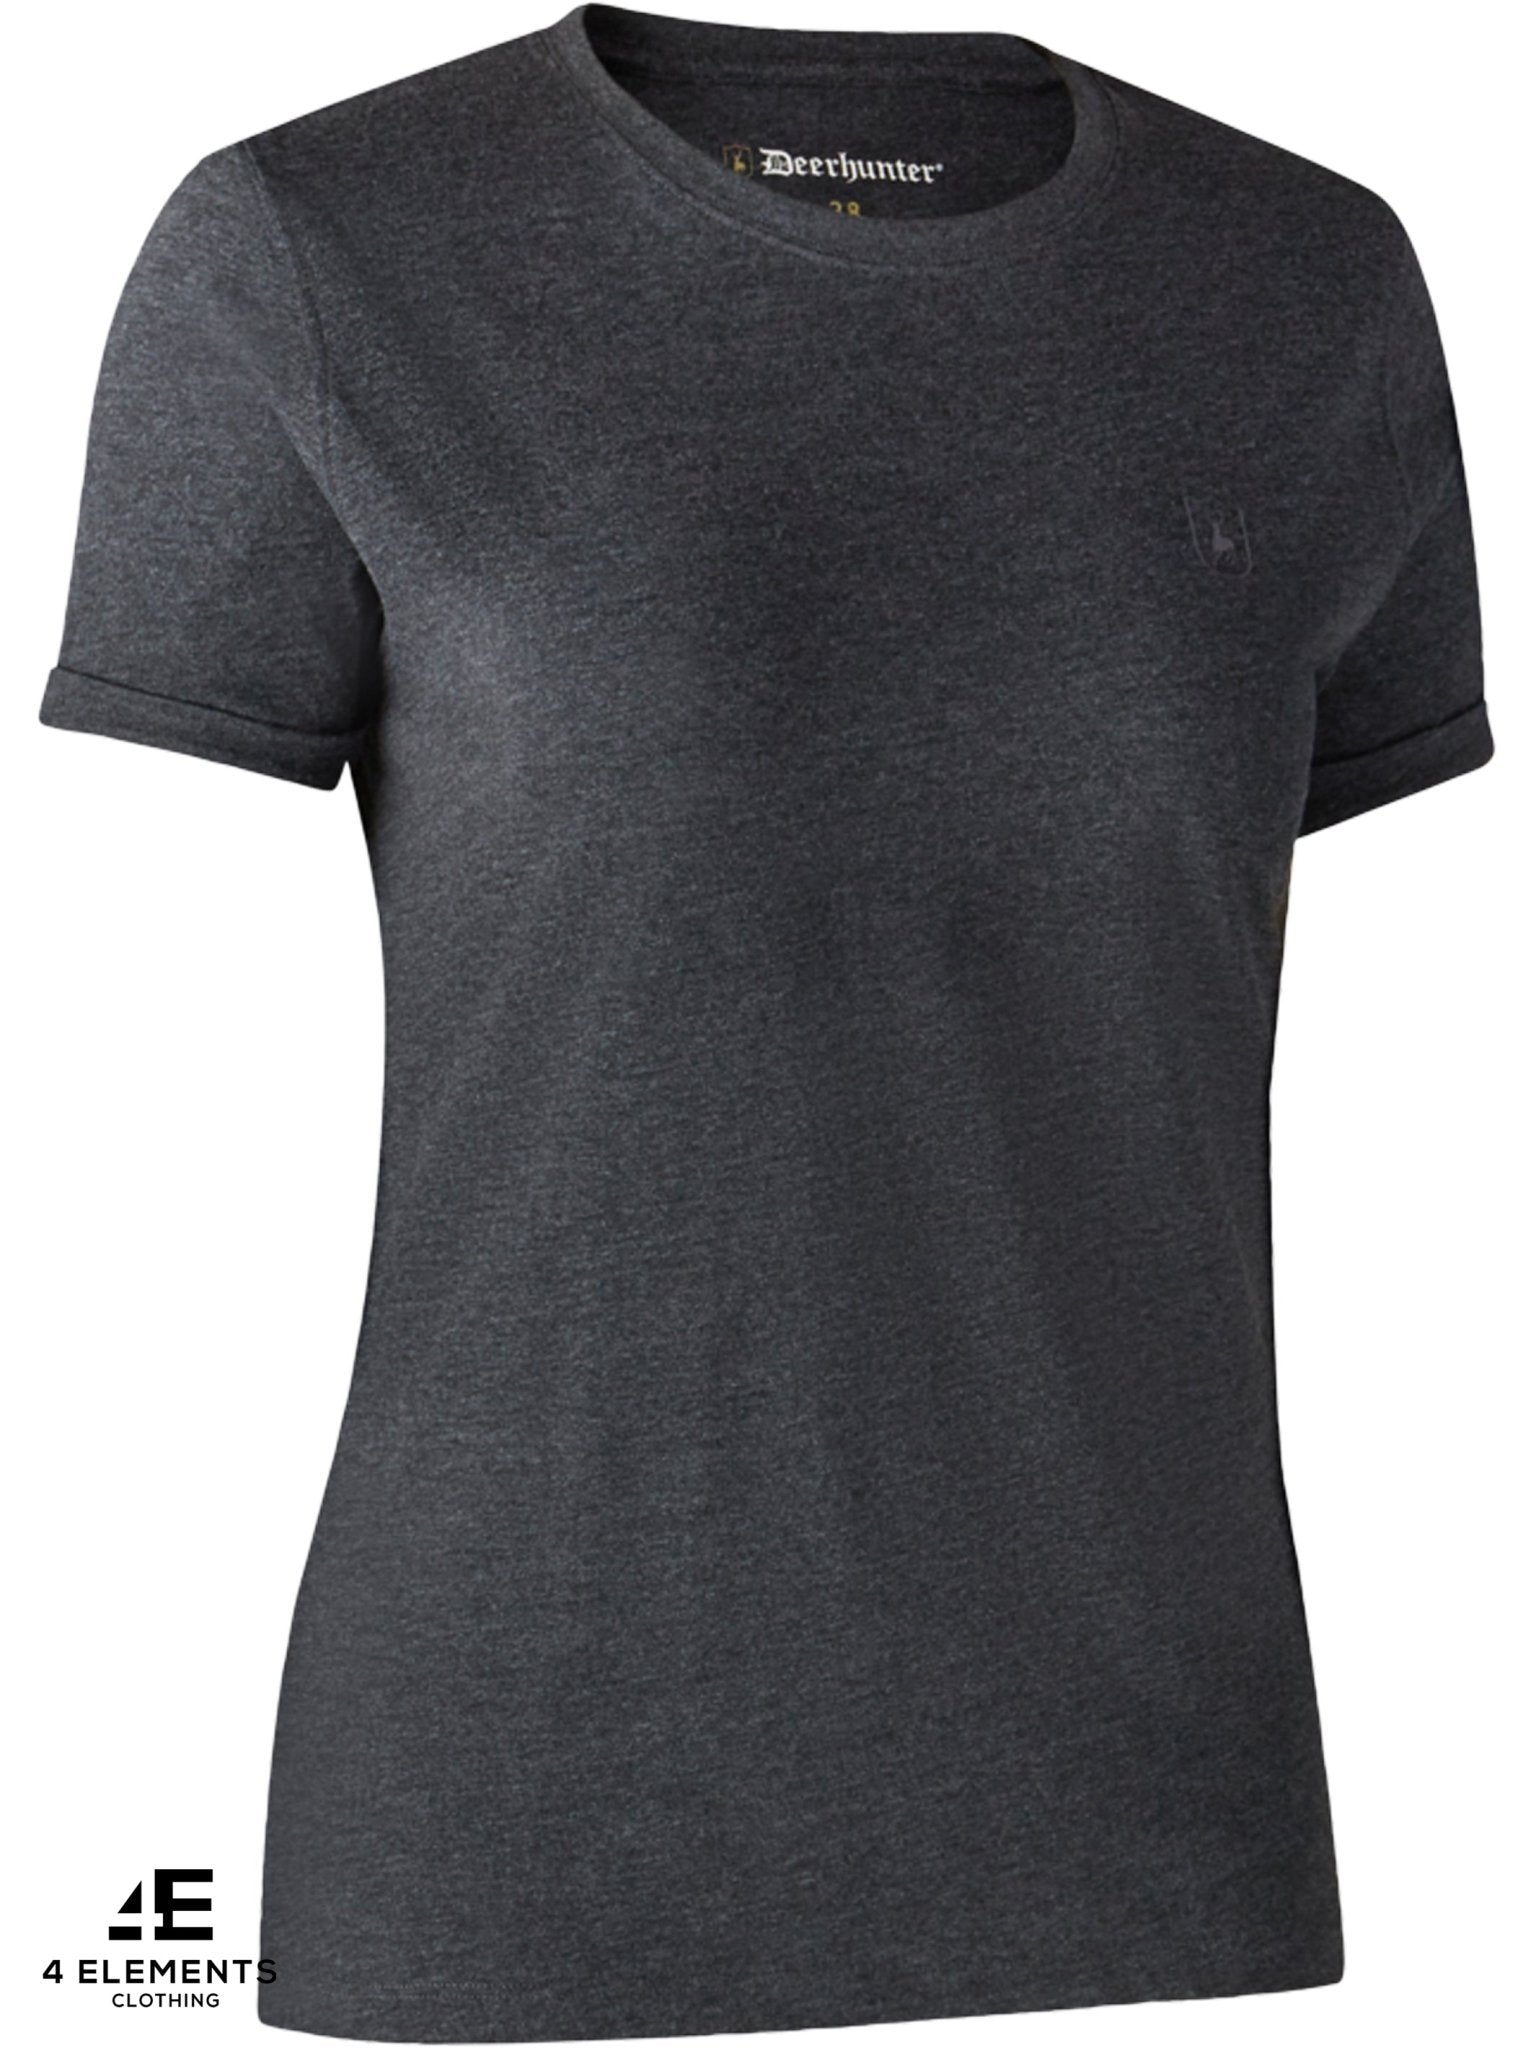 4elementsclothingDeerhunterDeerhunter - Ladies Basic 2-pack T-shirt / Ladies tee shirtsT-Shirt8395-354-36